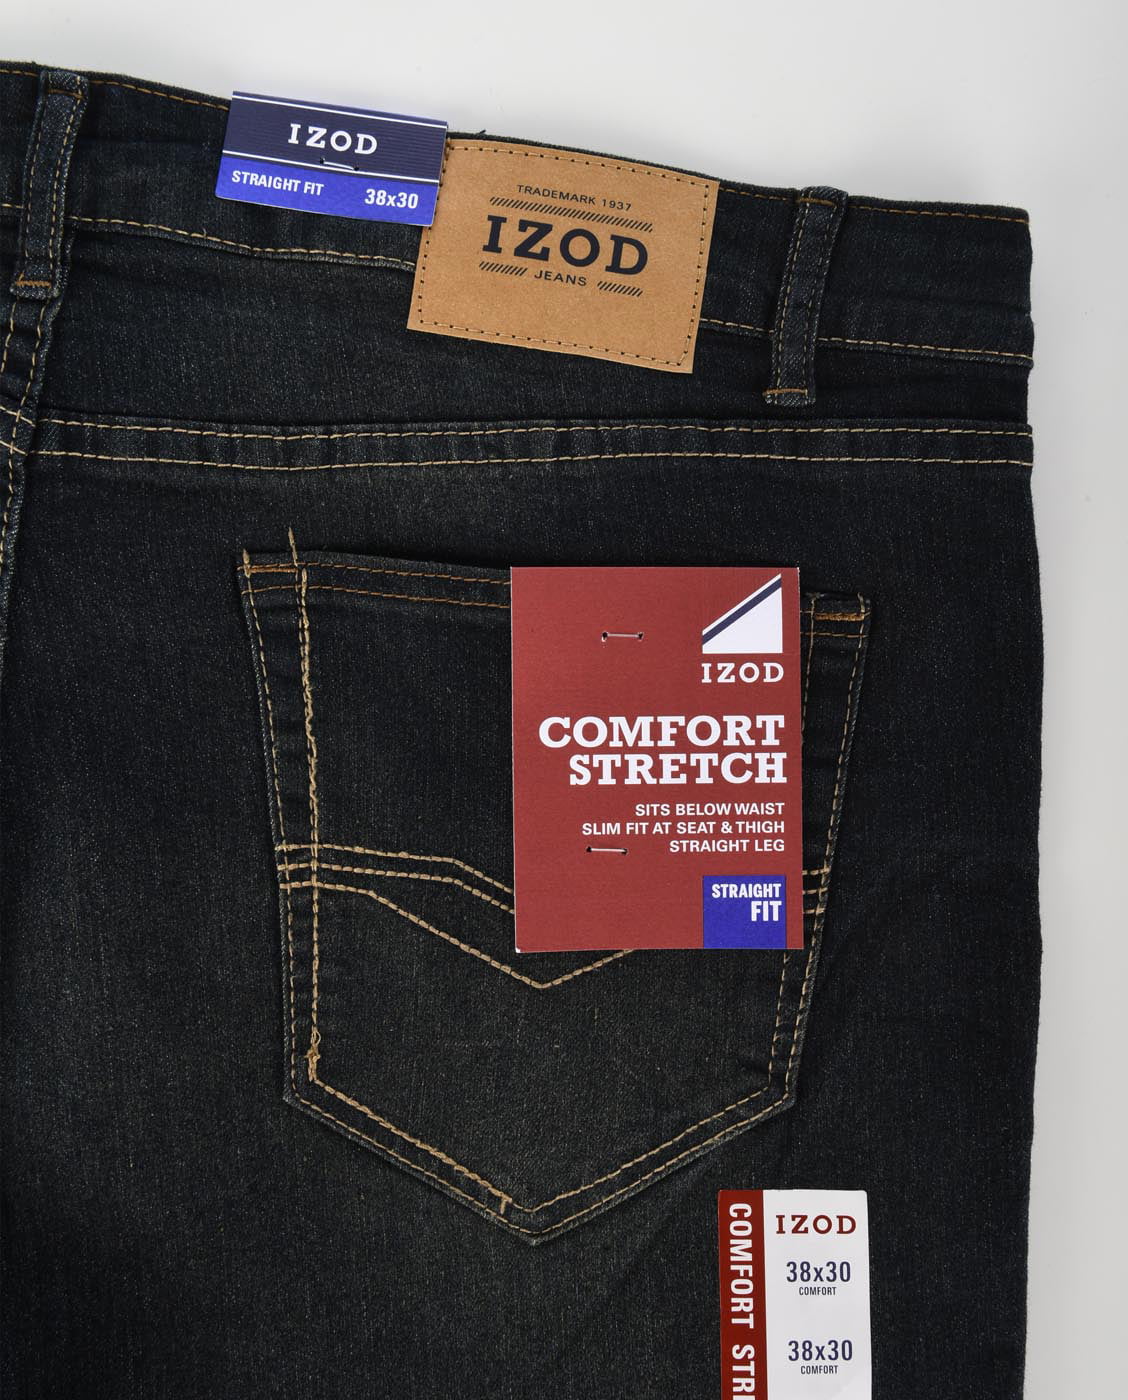 izod comfort stretch jeans costco